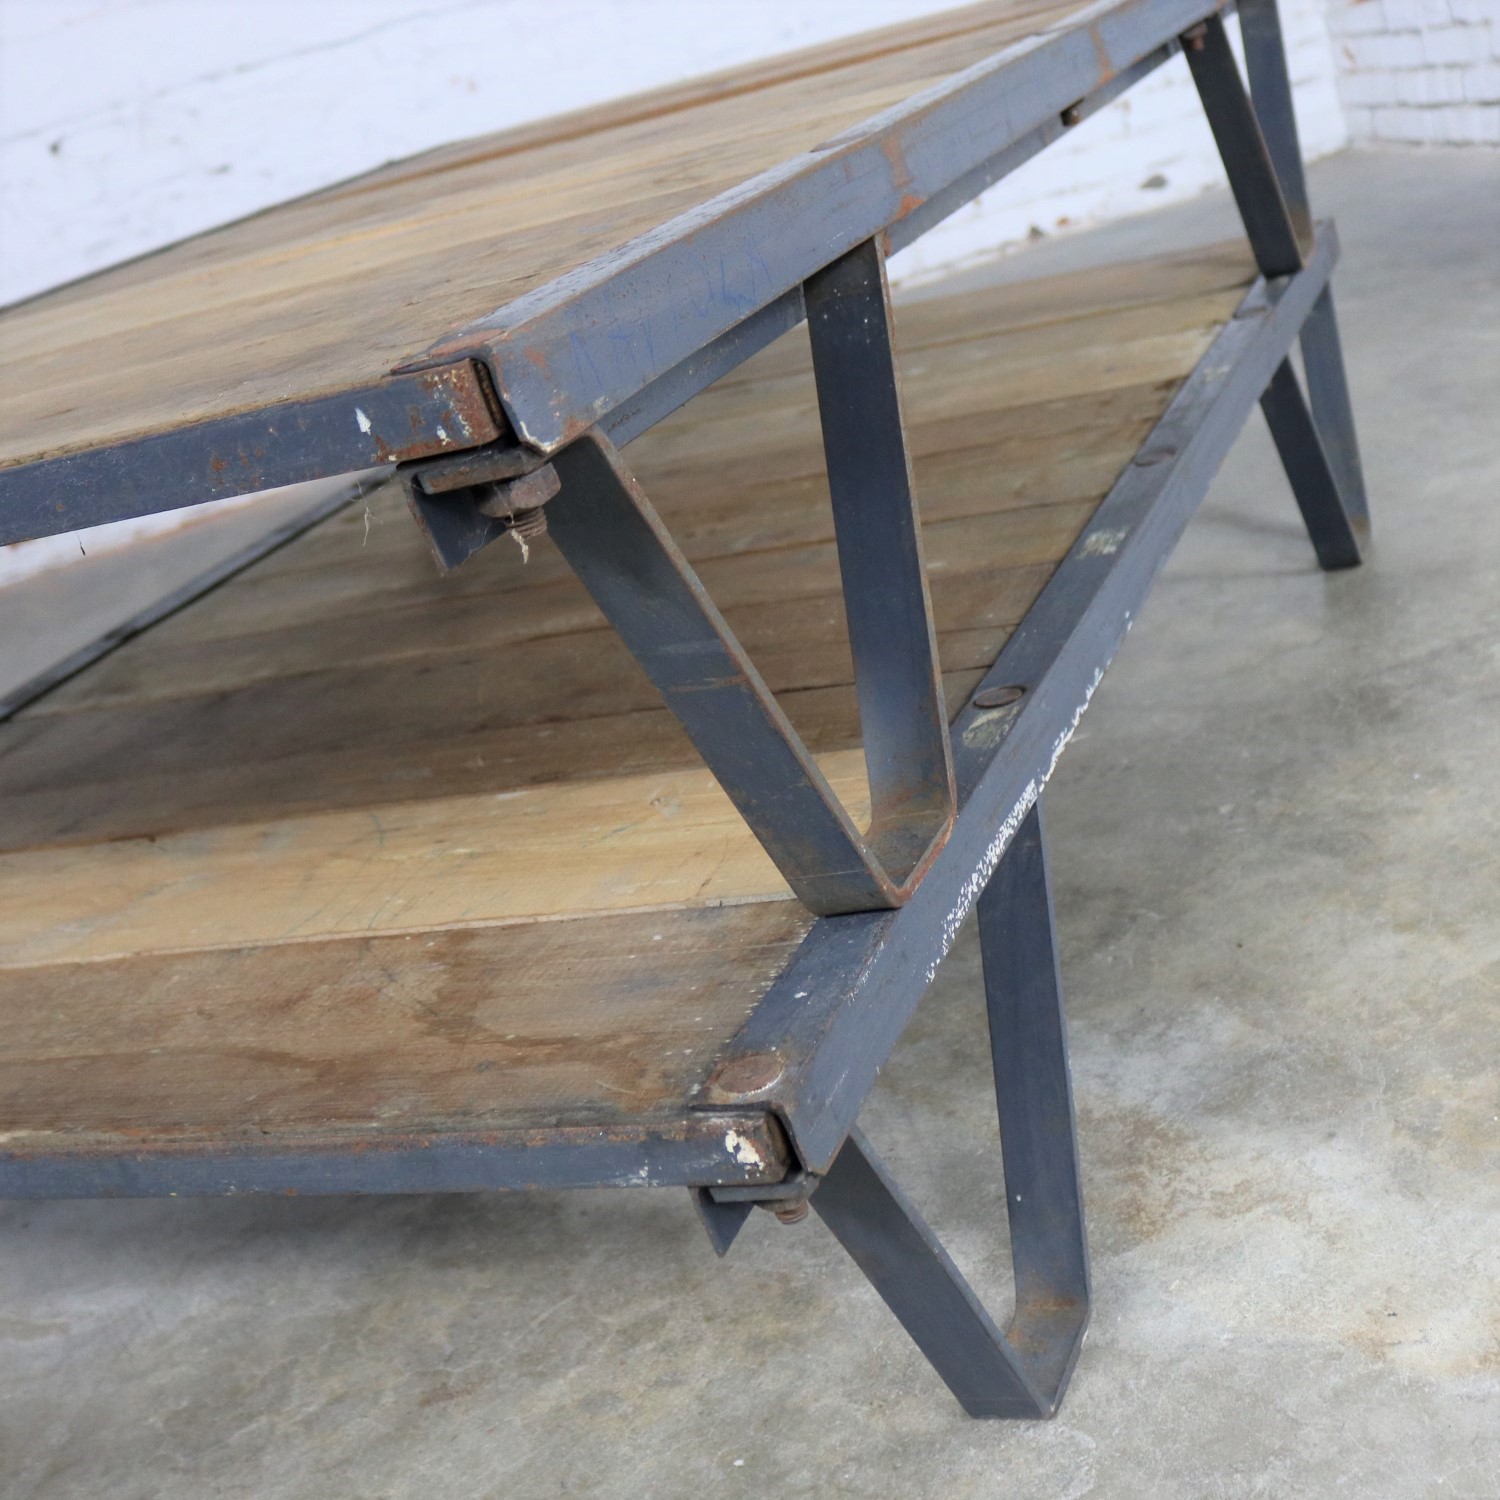 American Industrial Oak and Steel Pallet Coffee Table Three by Five Feet